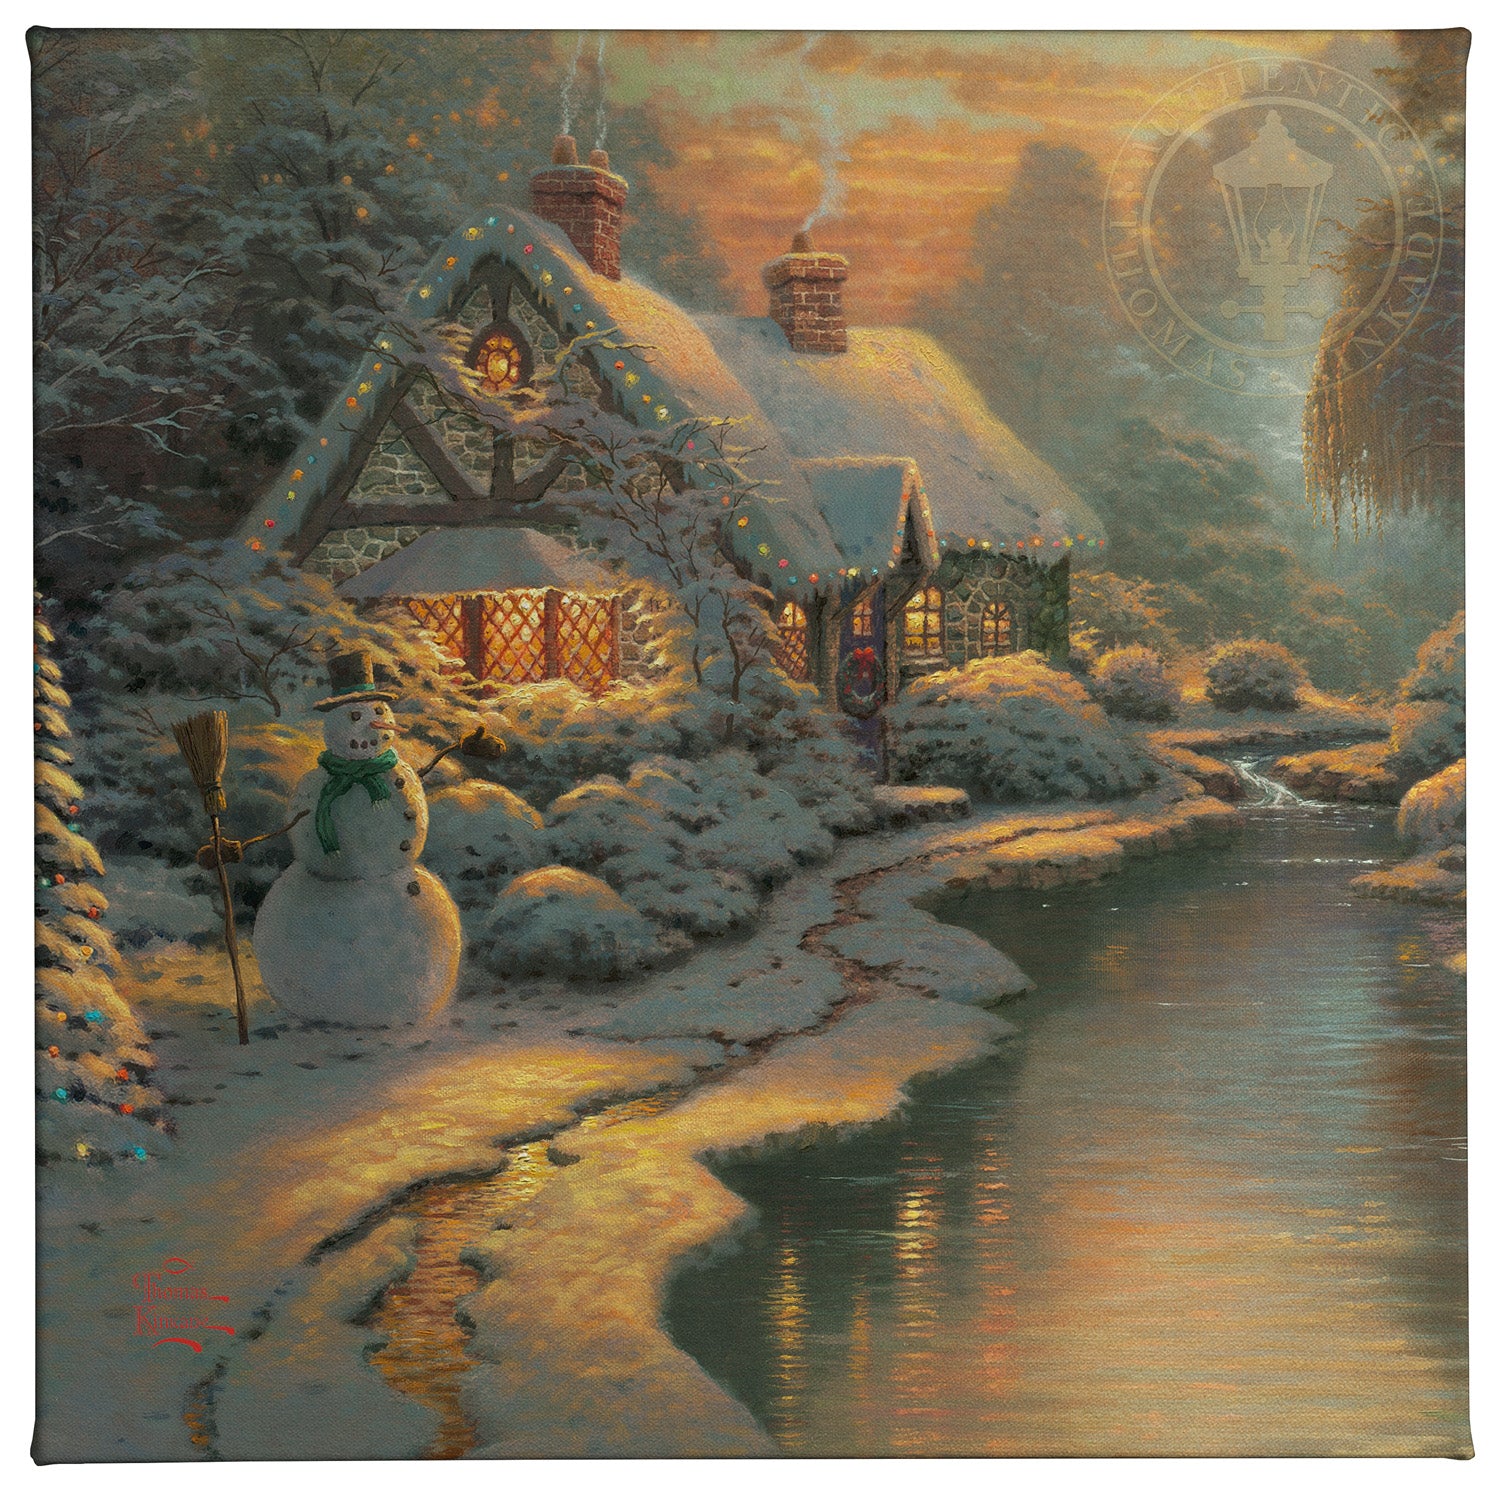 Hand-Painted Village Christmas Set Inspired By Thomas Kinkade Art